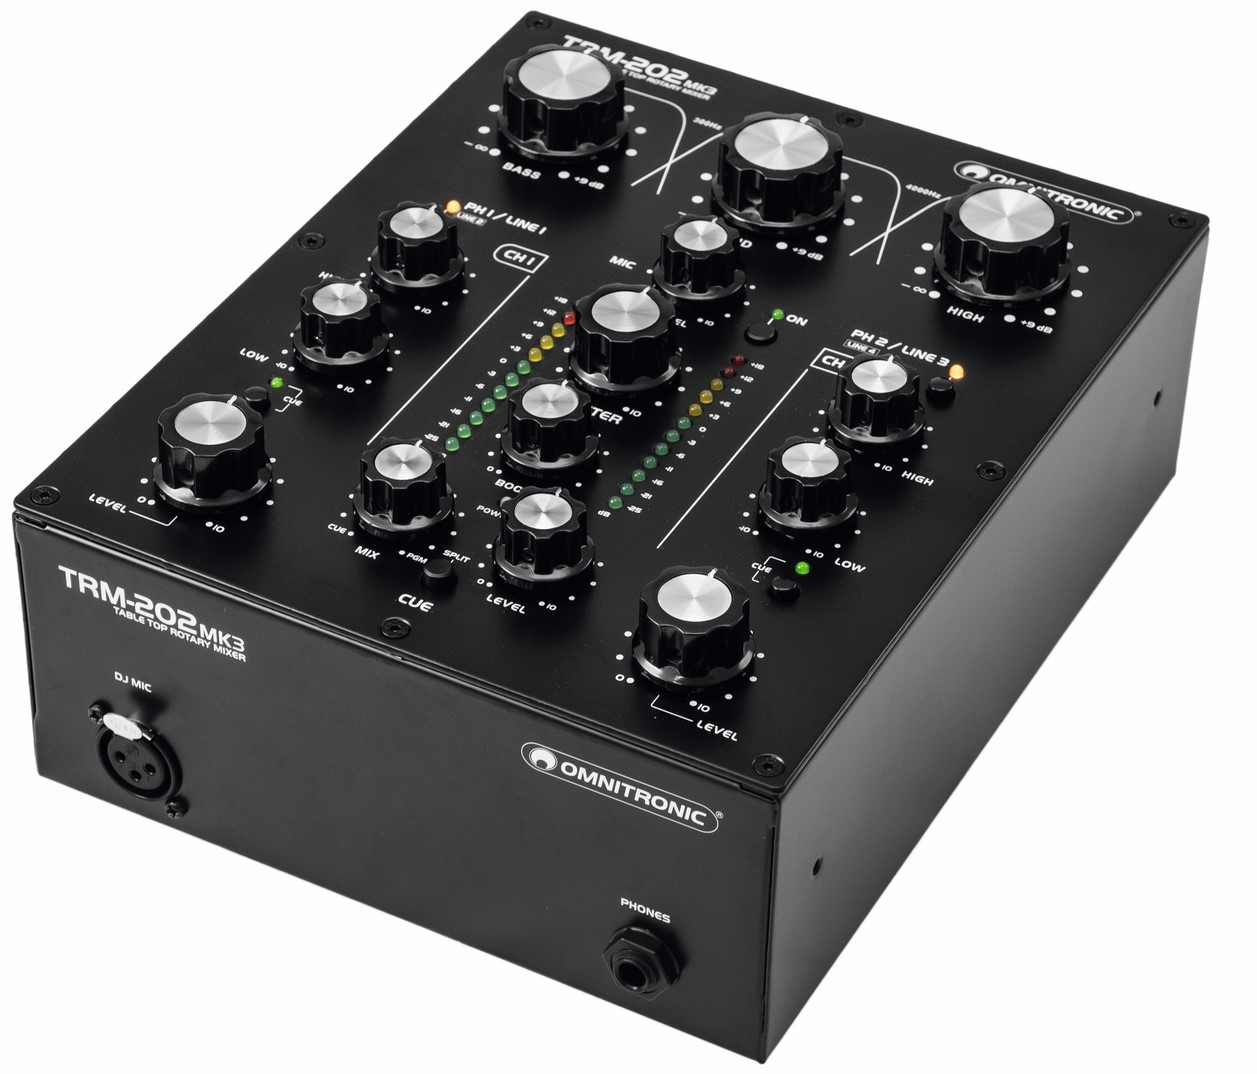 Omnitronic Trm-202mk3 2-channel Rotary Mixer - DJ-Mixer - Variation 1